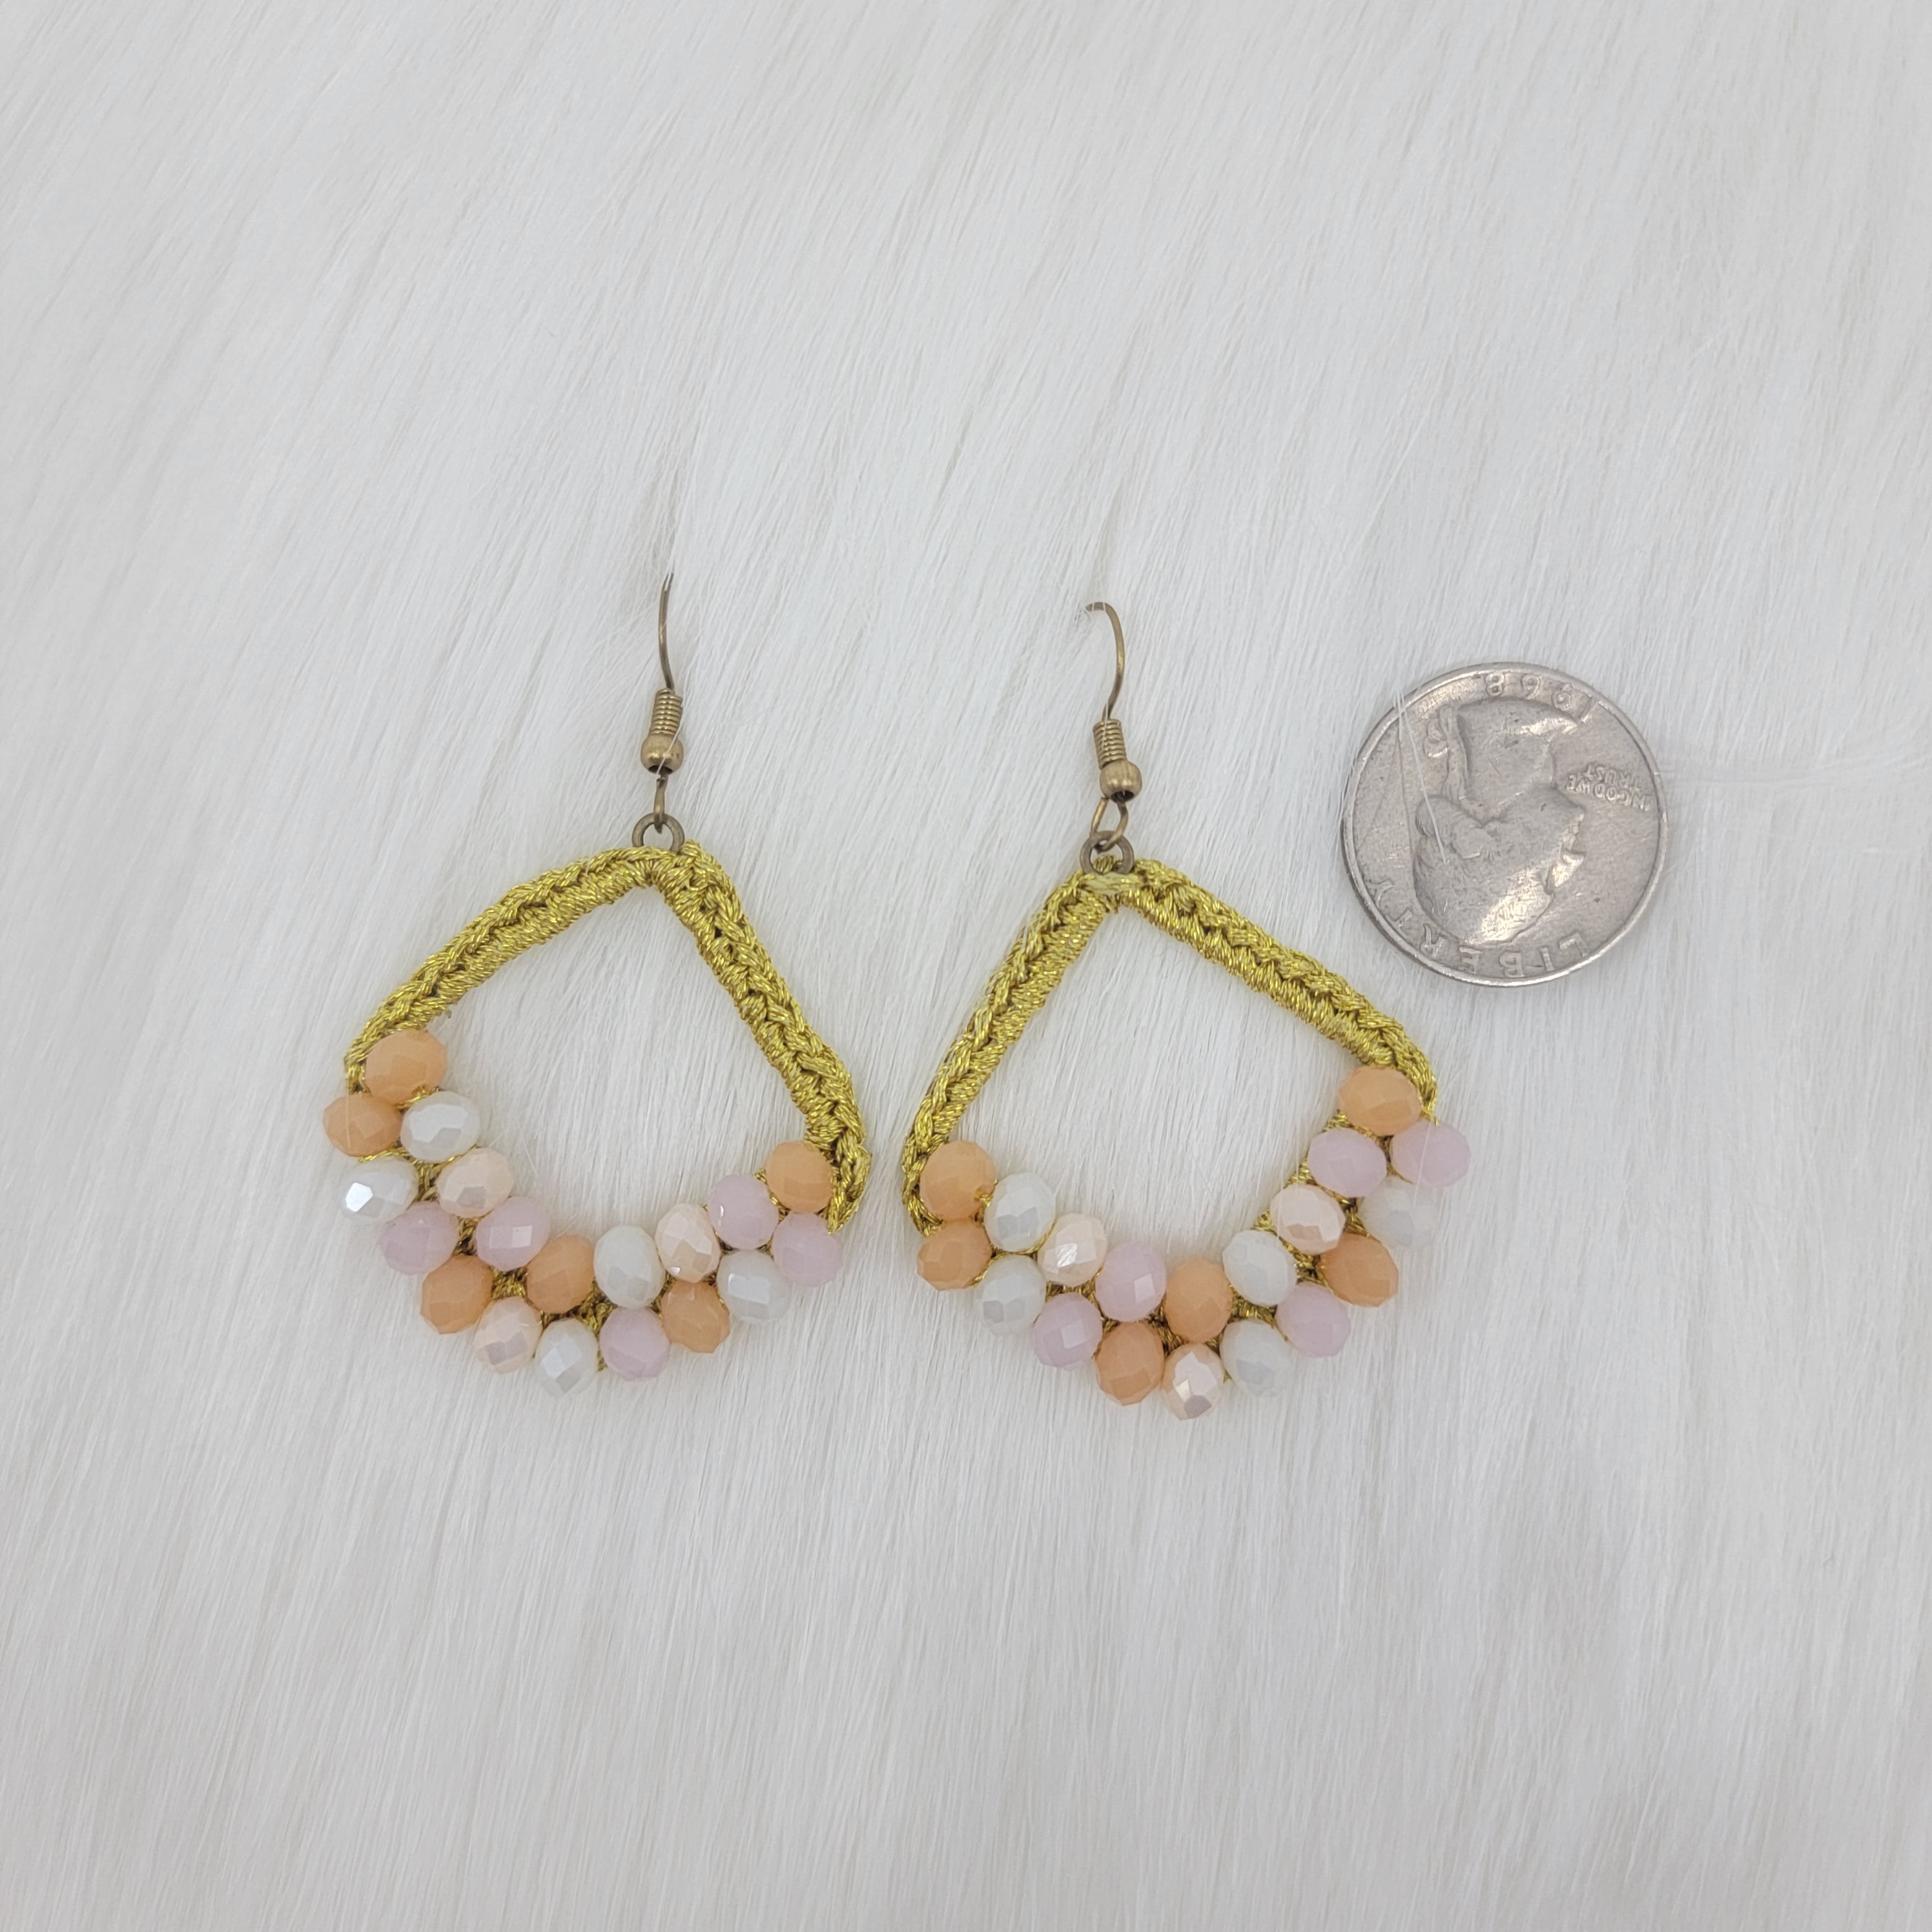 Crochet Earrings With Crystal Beads